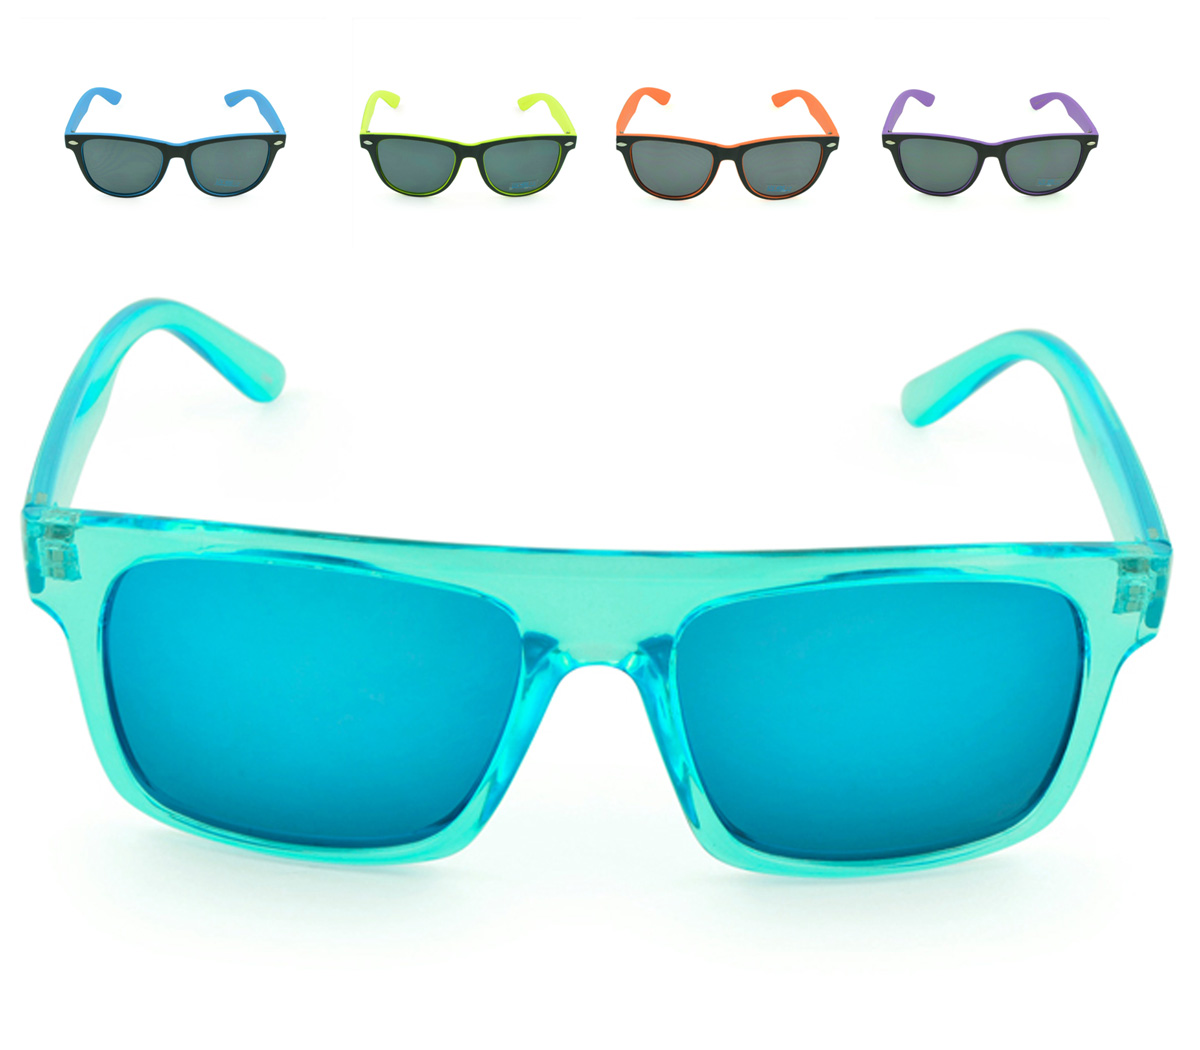 Belle Donne - Style Sunglasses Trendy Cheap Sunglasses High Quality Animal Print